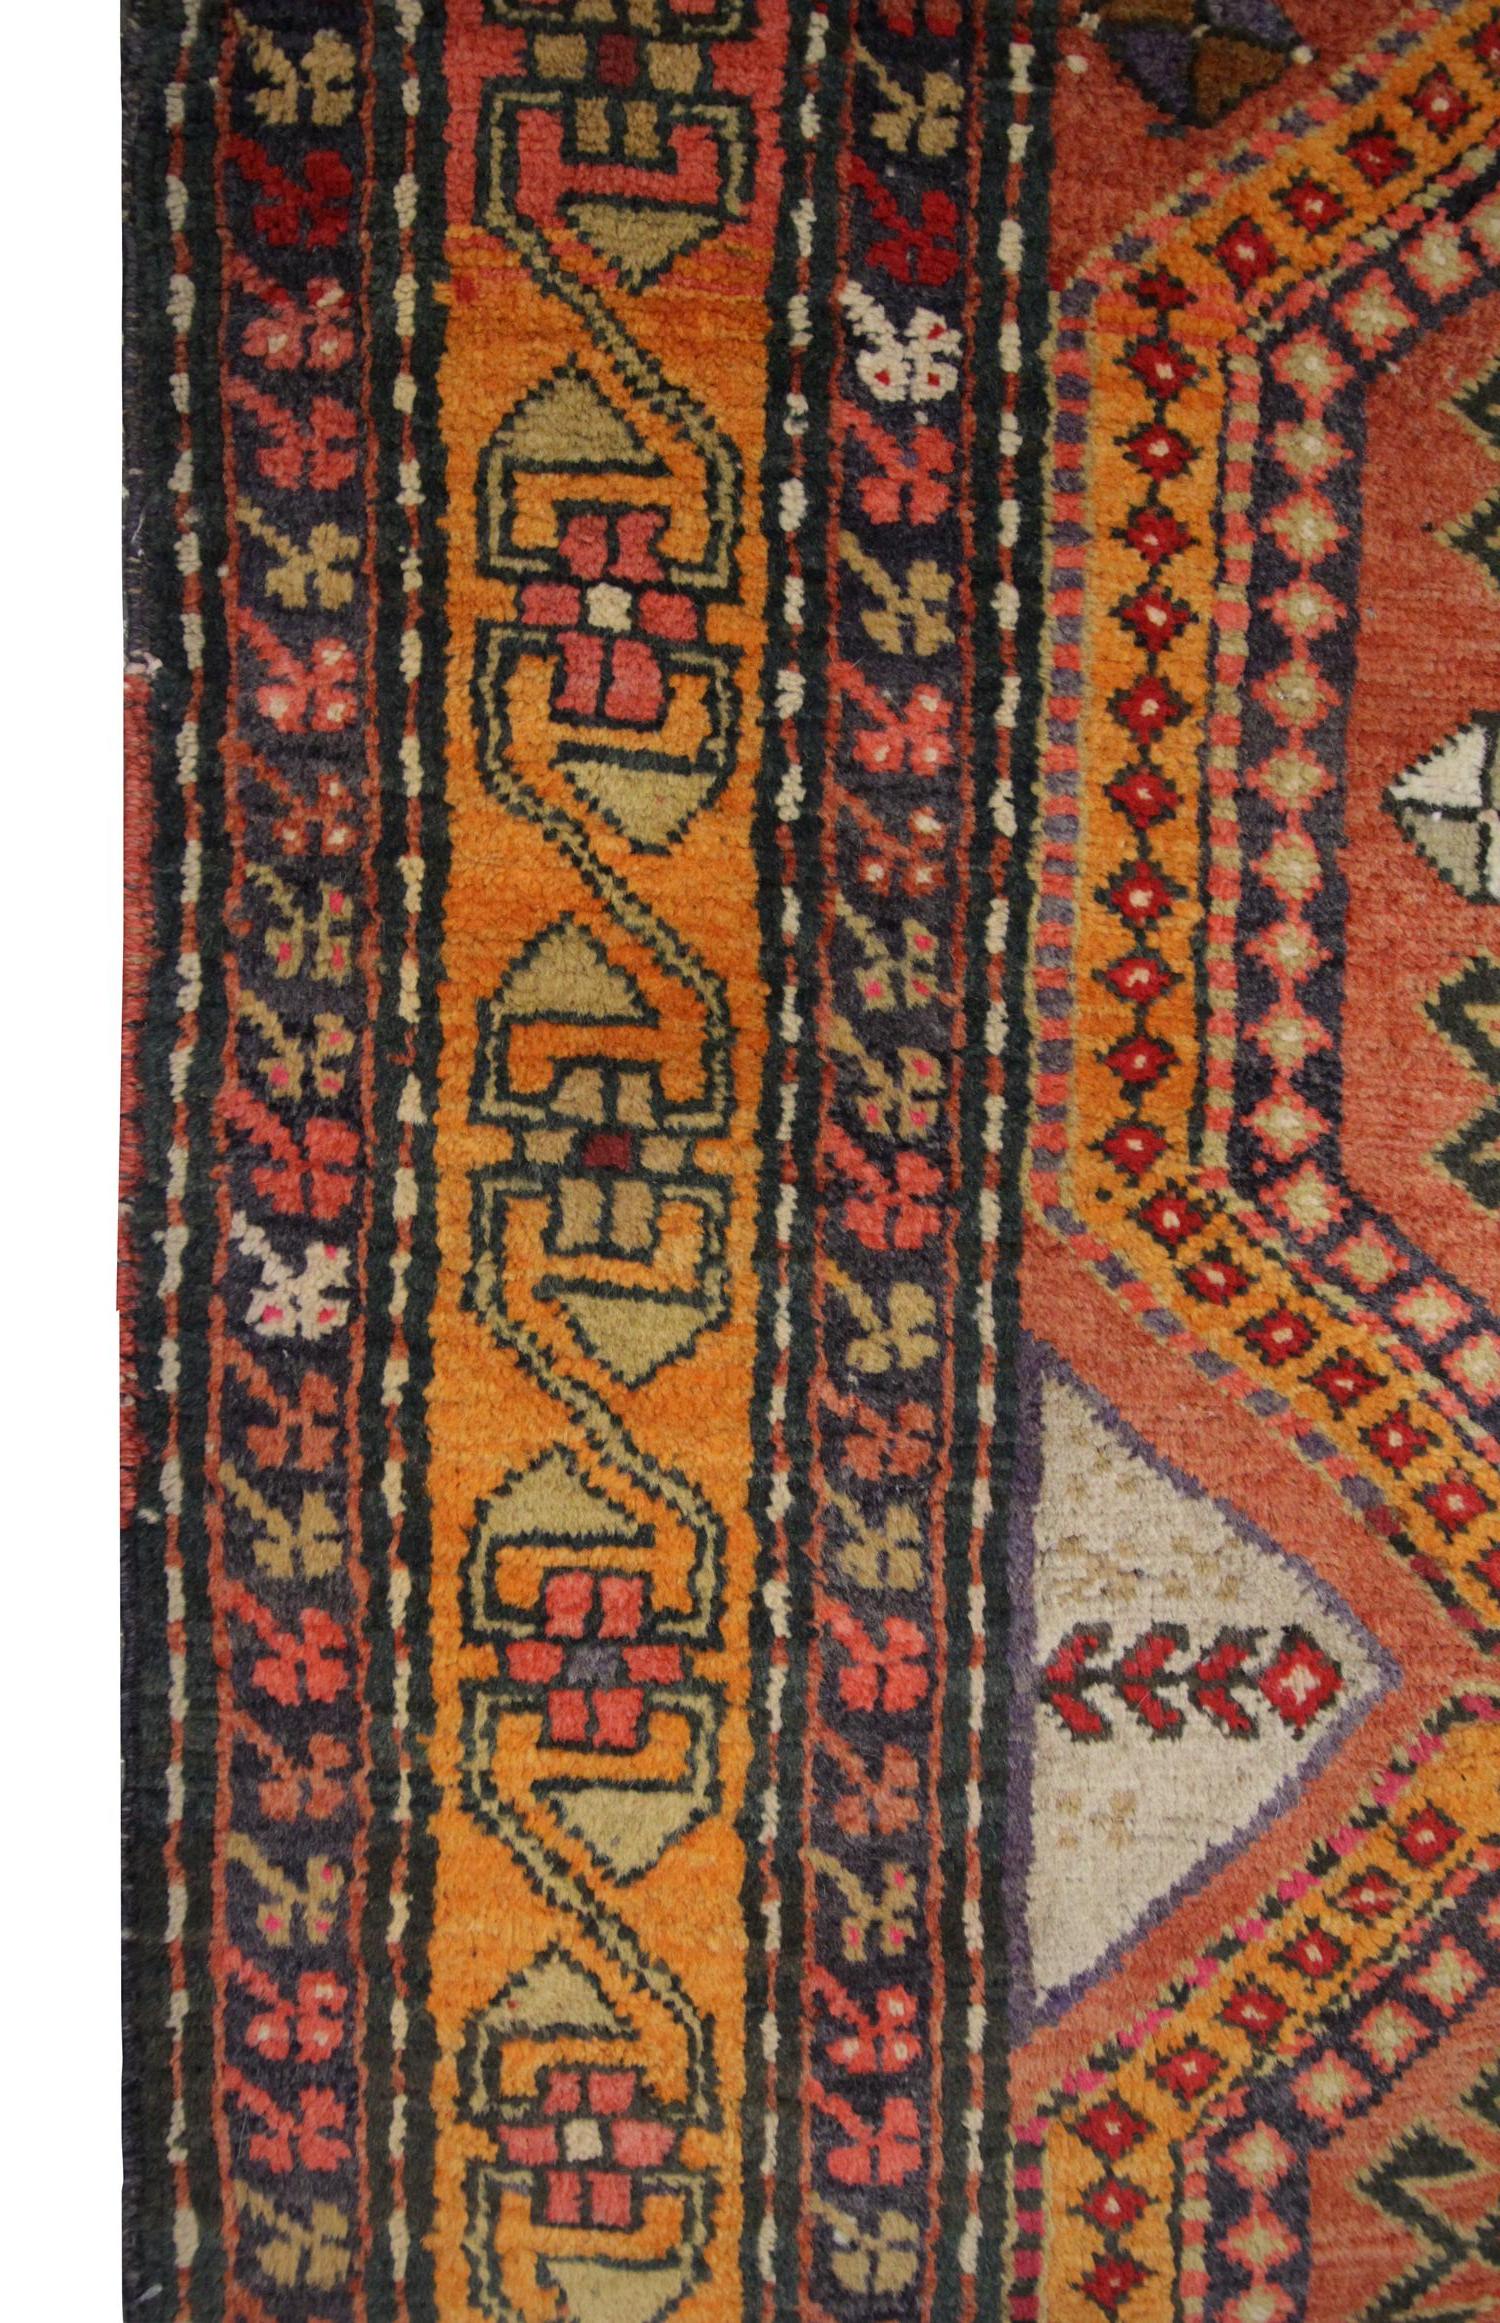 Early 20th Century Handmade Carpet Traditional Antique Carpet, Orange Wool Caucasian Runner Rug For Sale